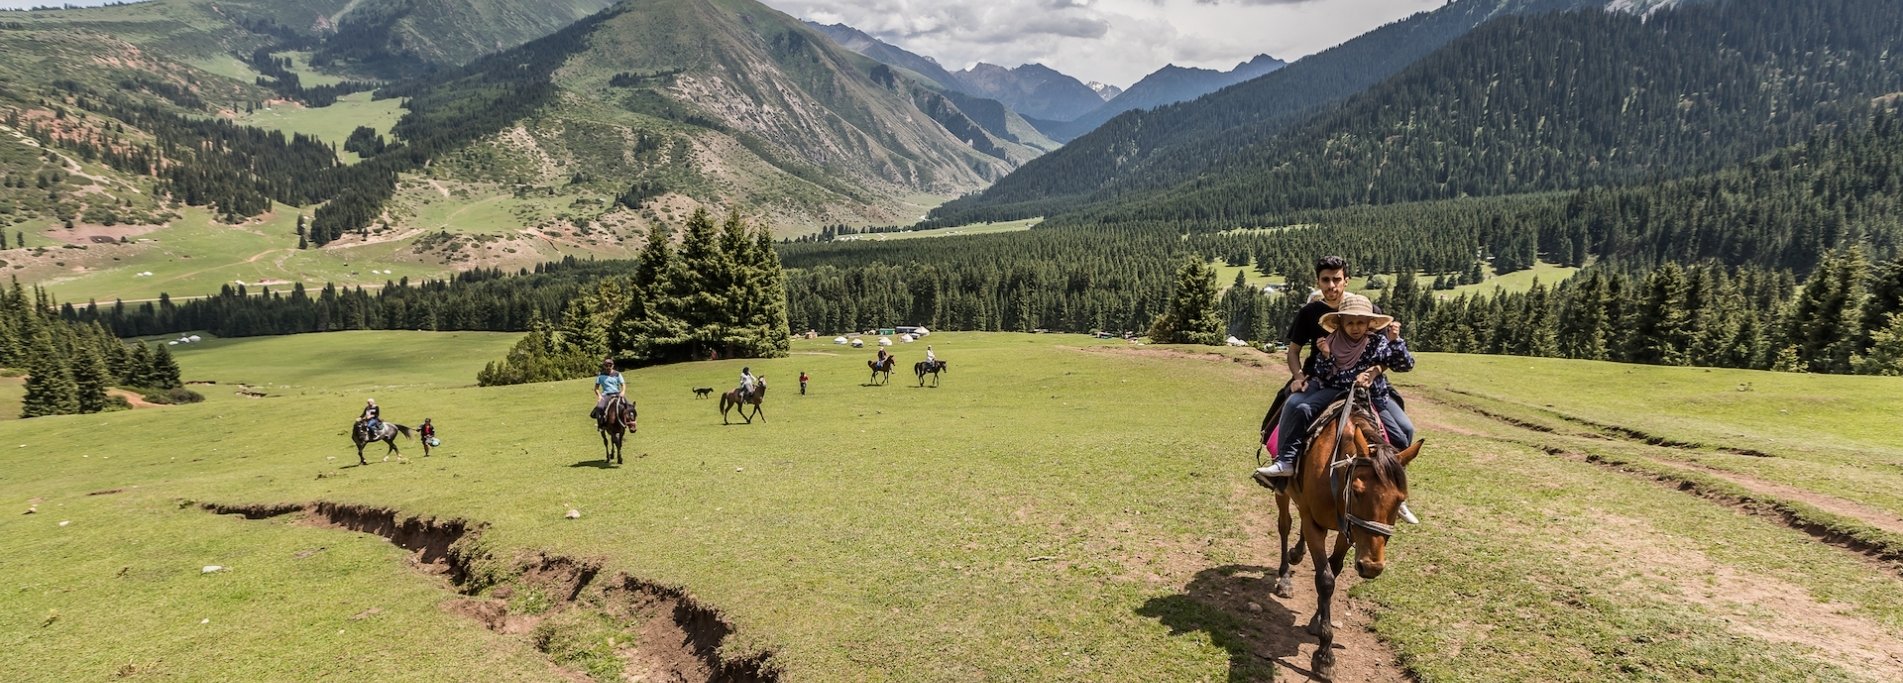 Holidays in Jyrgalan valley - Horse riding in Kyrgyzstan 